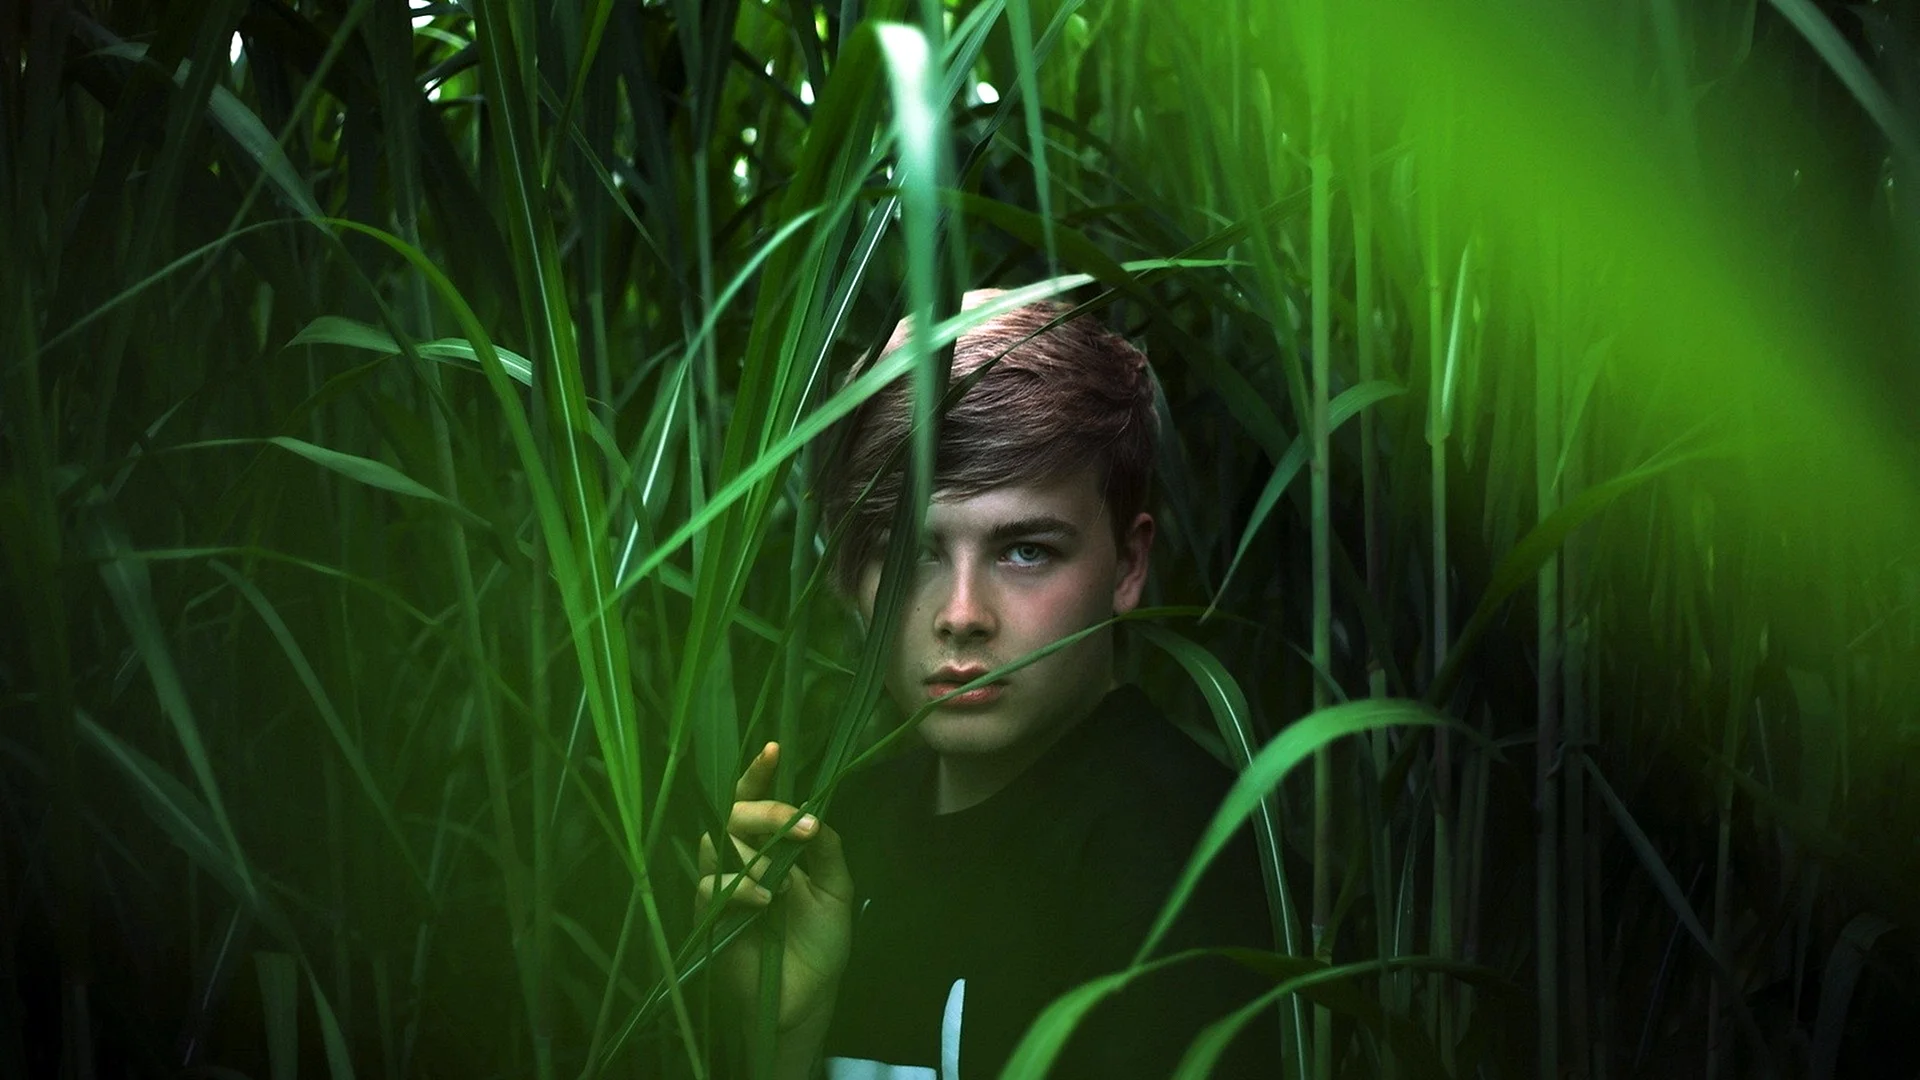 Boy In Grass Wallpaper